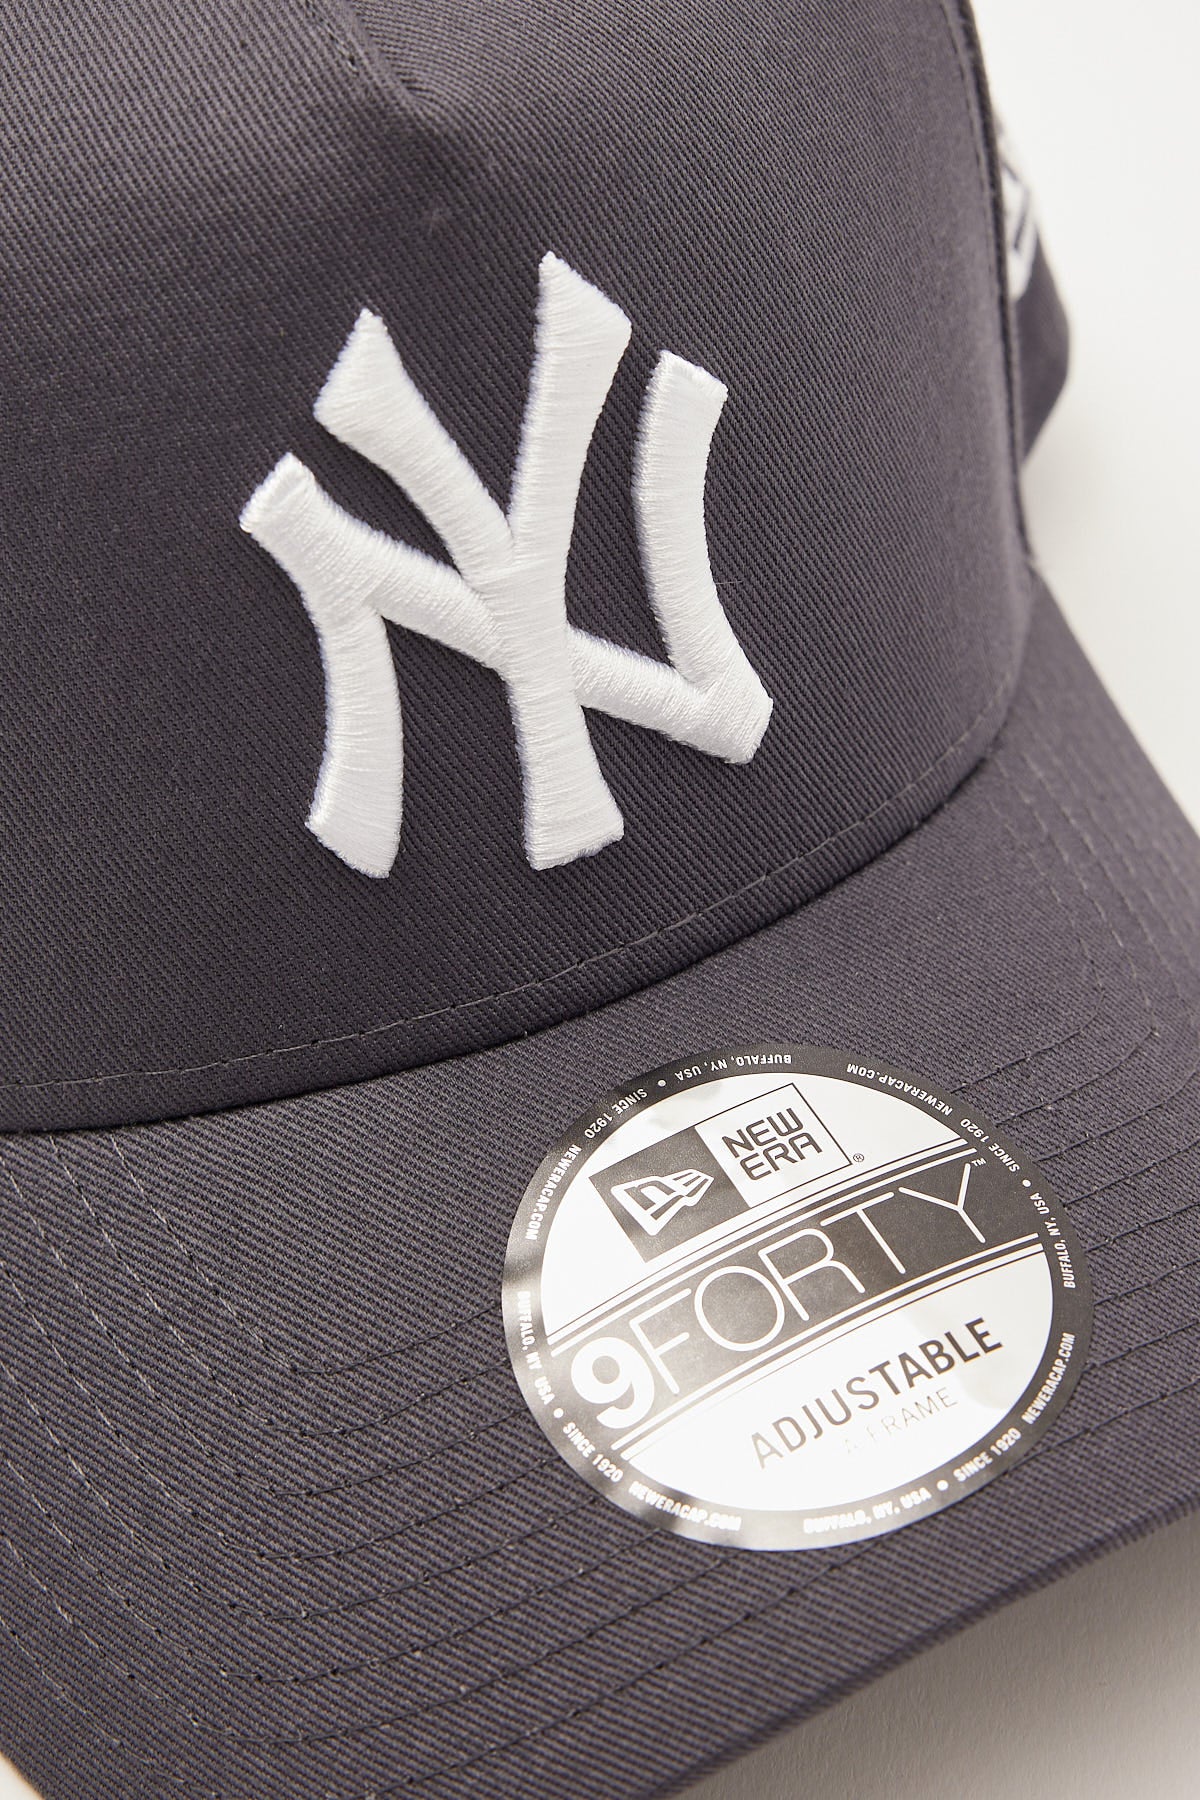 New Era 9Forty AFrame NY Yankees Graphite Grey